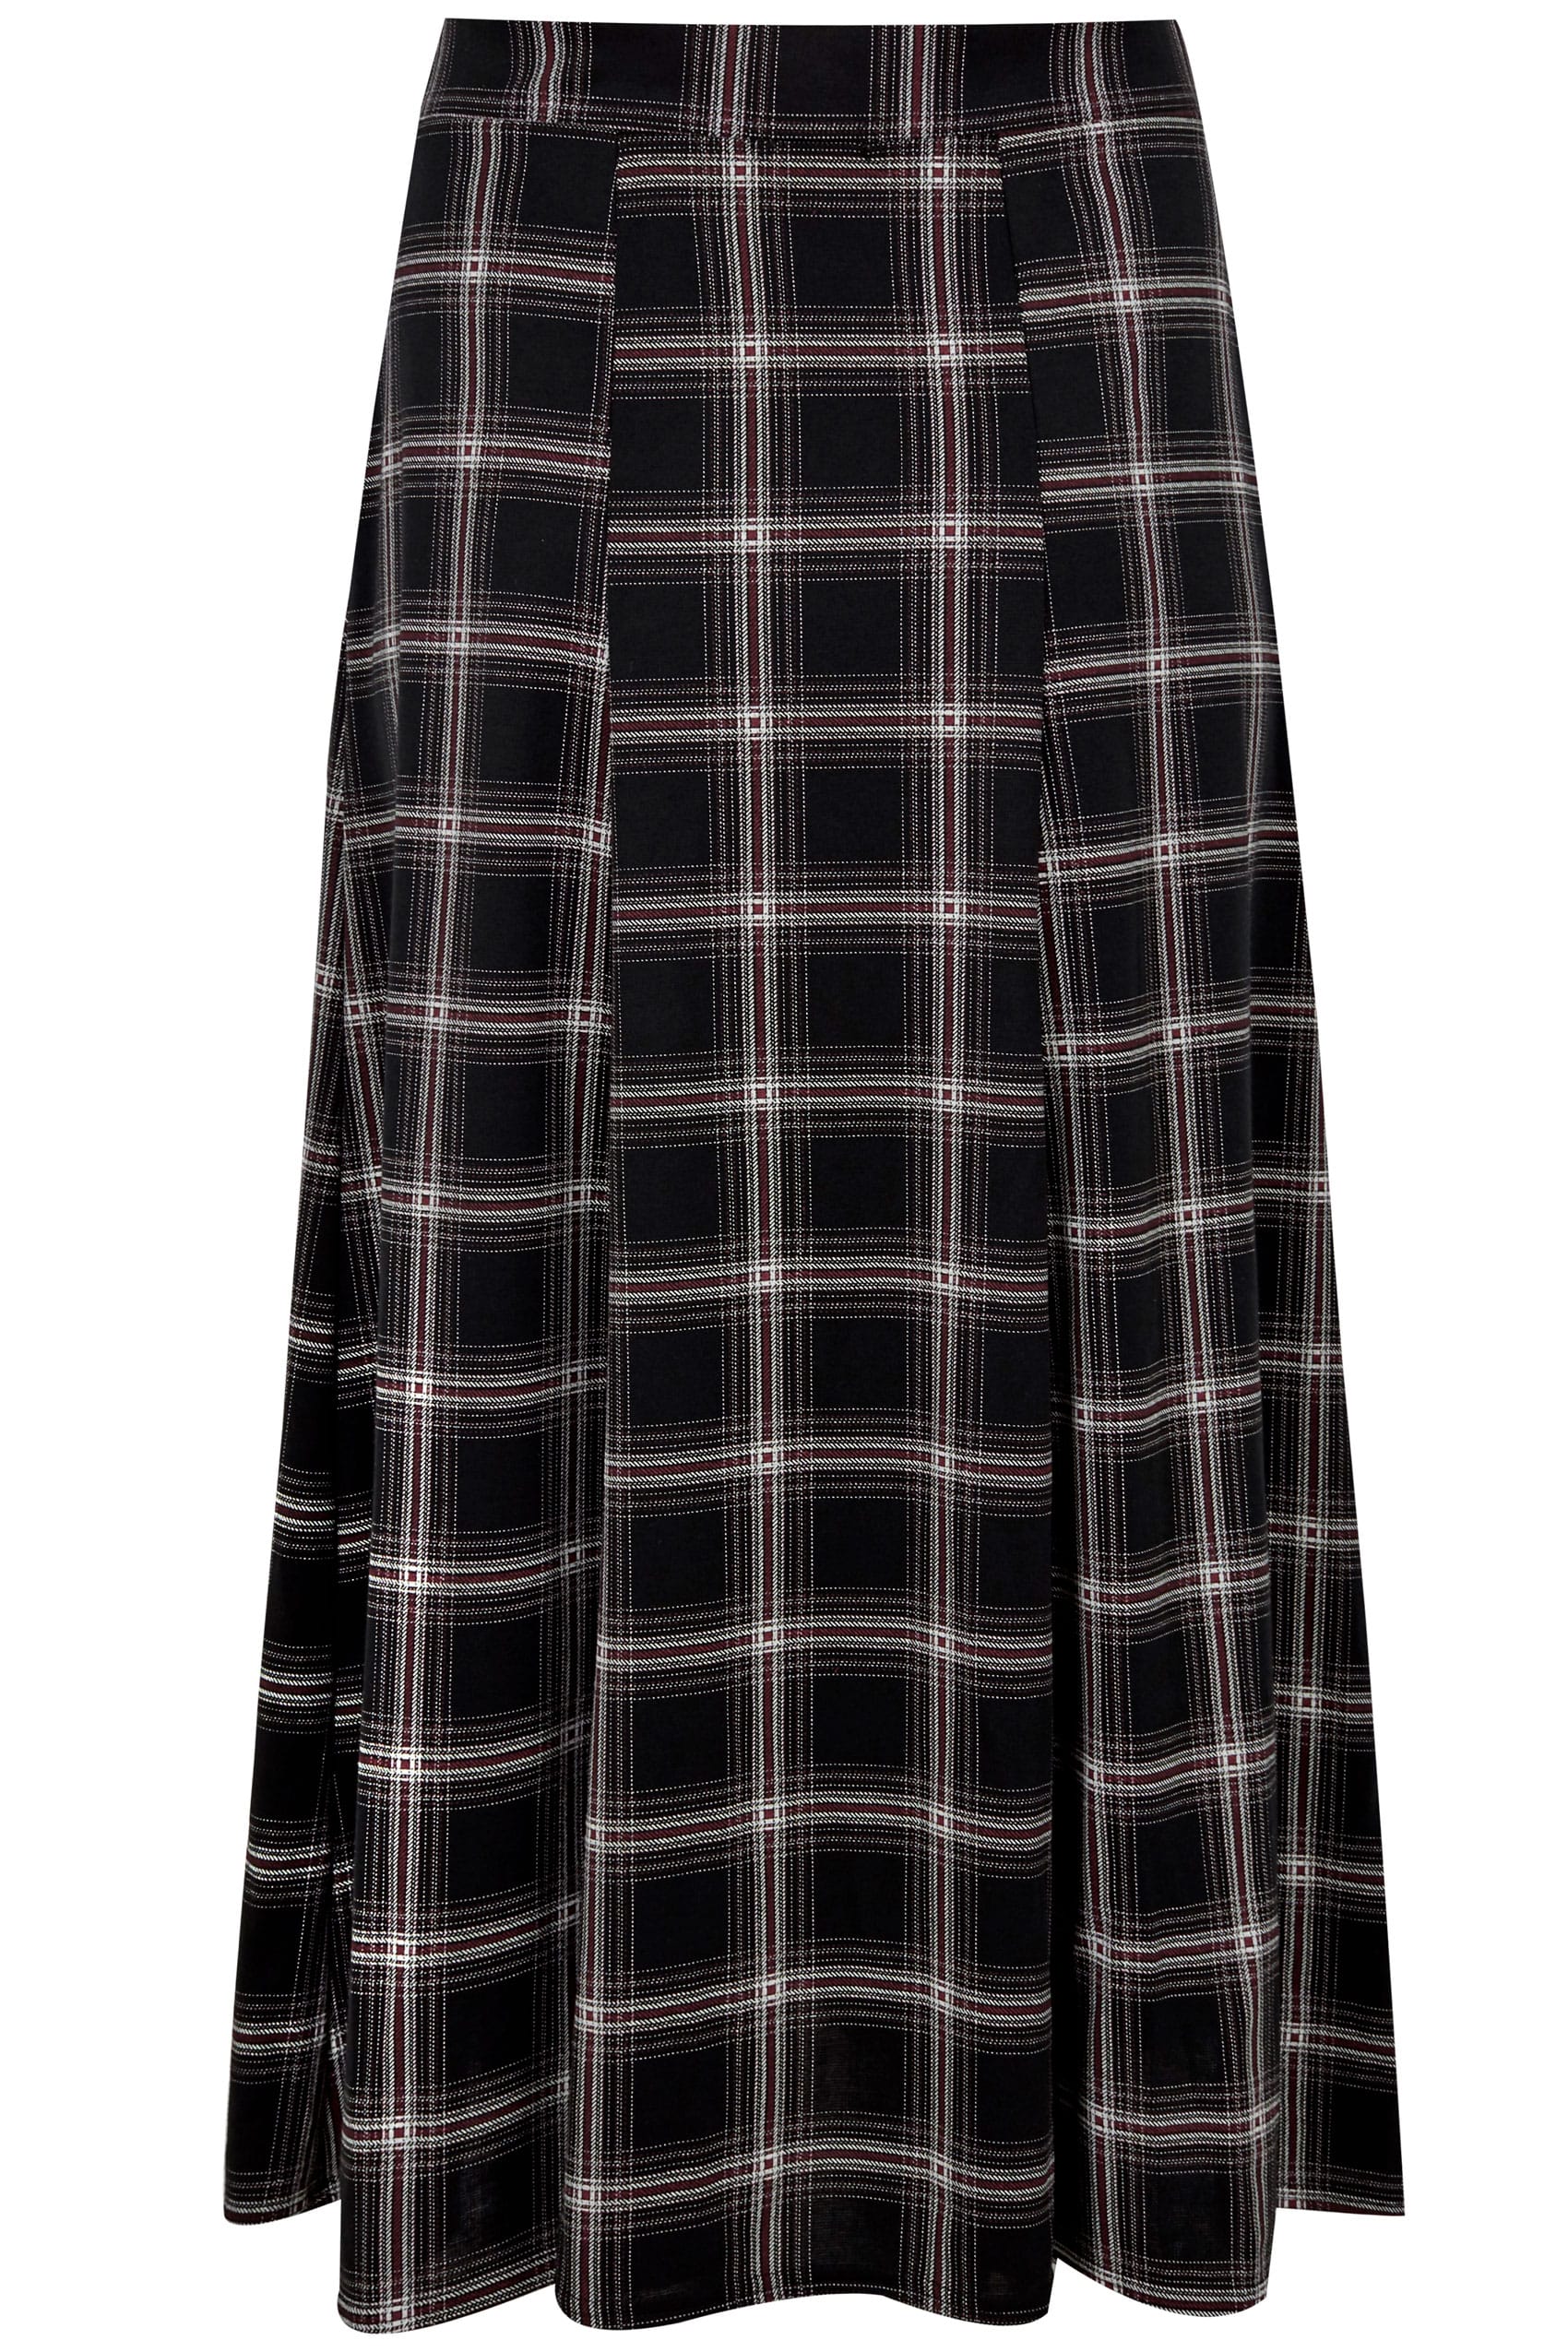 Black, White & Red Checked Maxi Skirt, Plus size 16 to 36